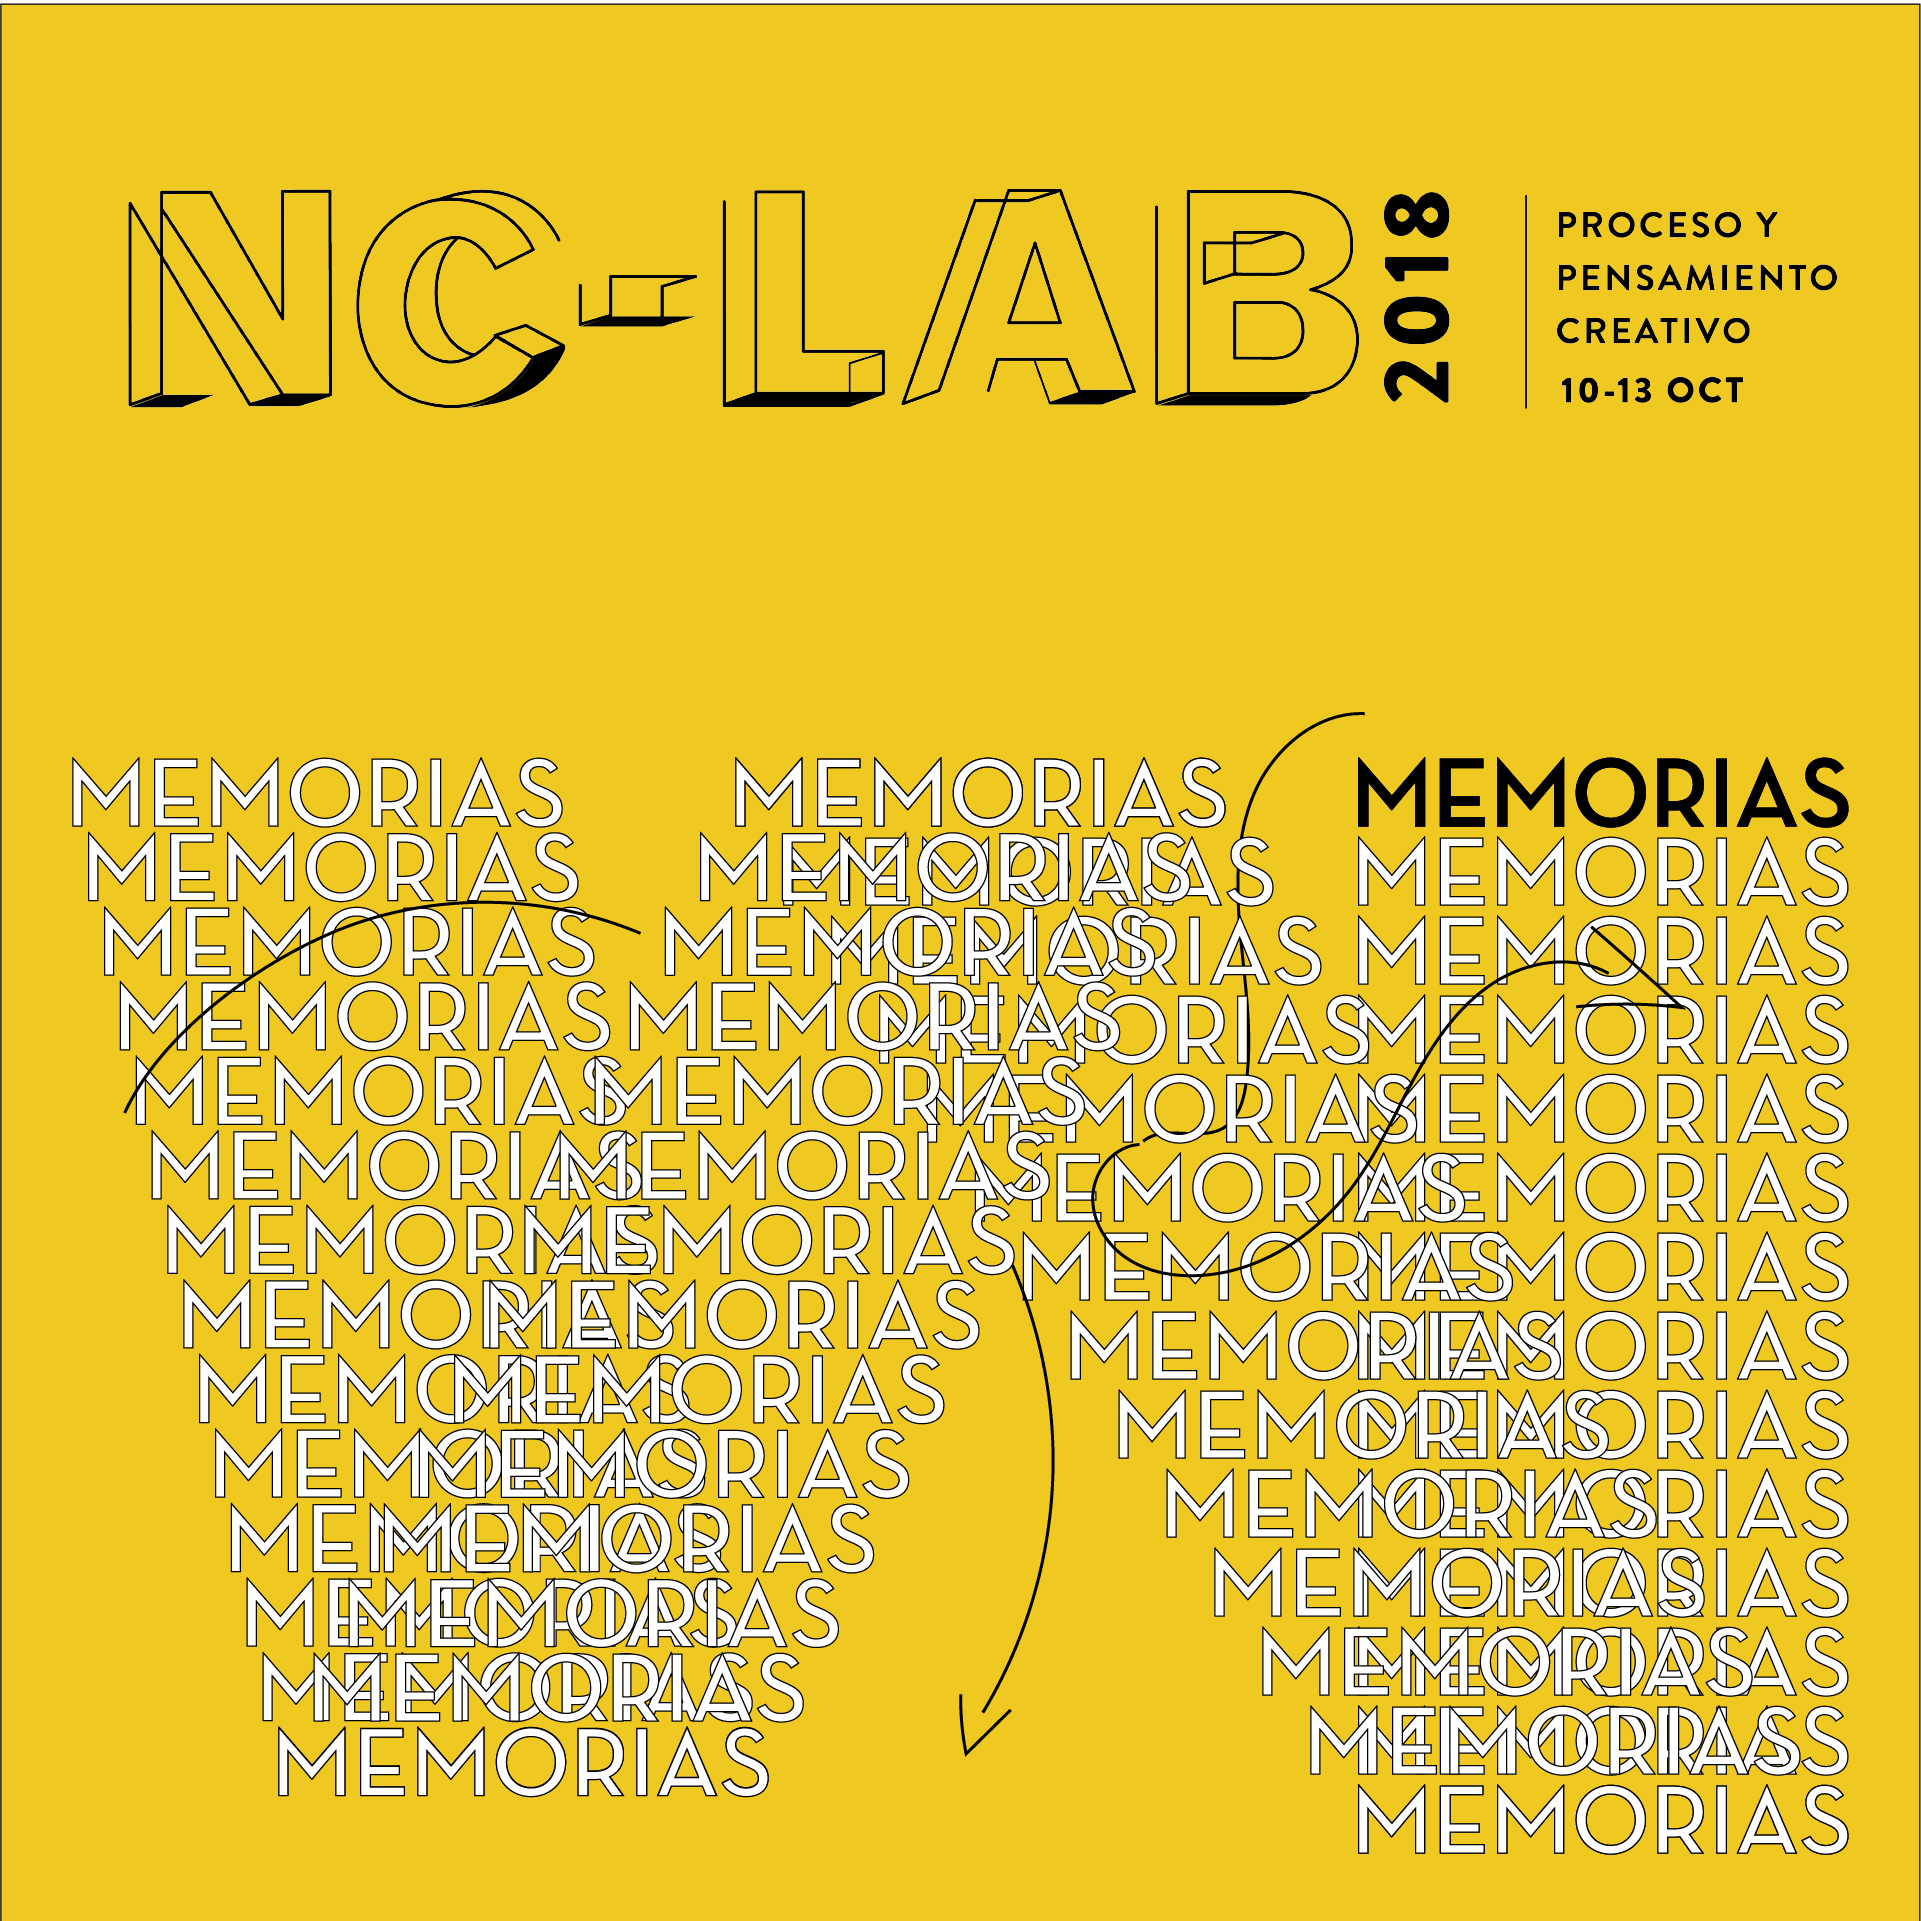 Portadilla digital NC-LAB 2018 memorias